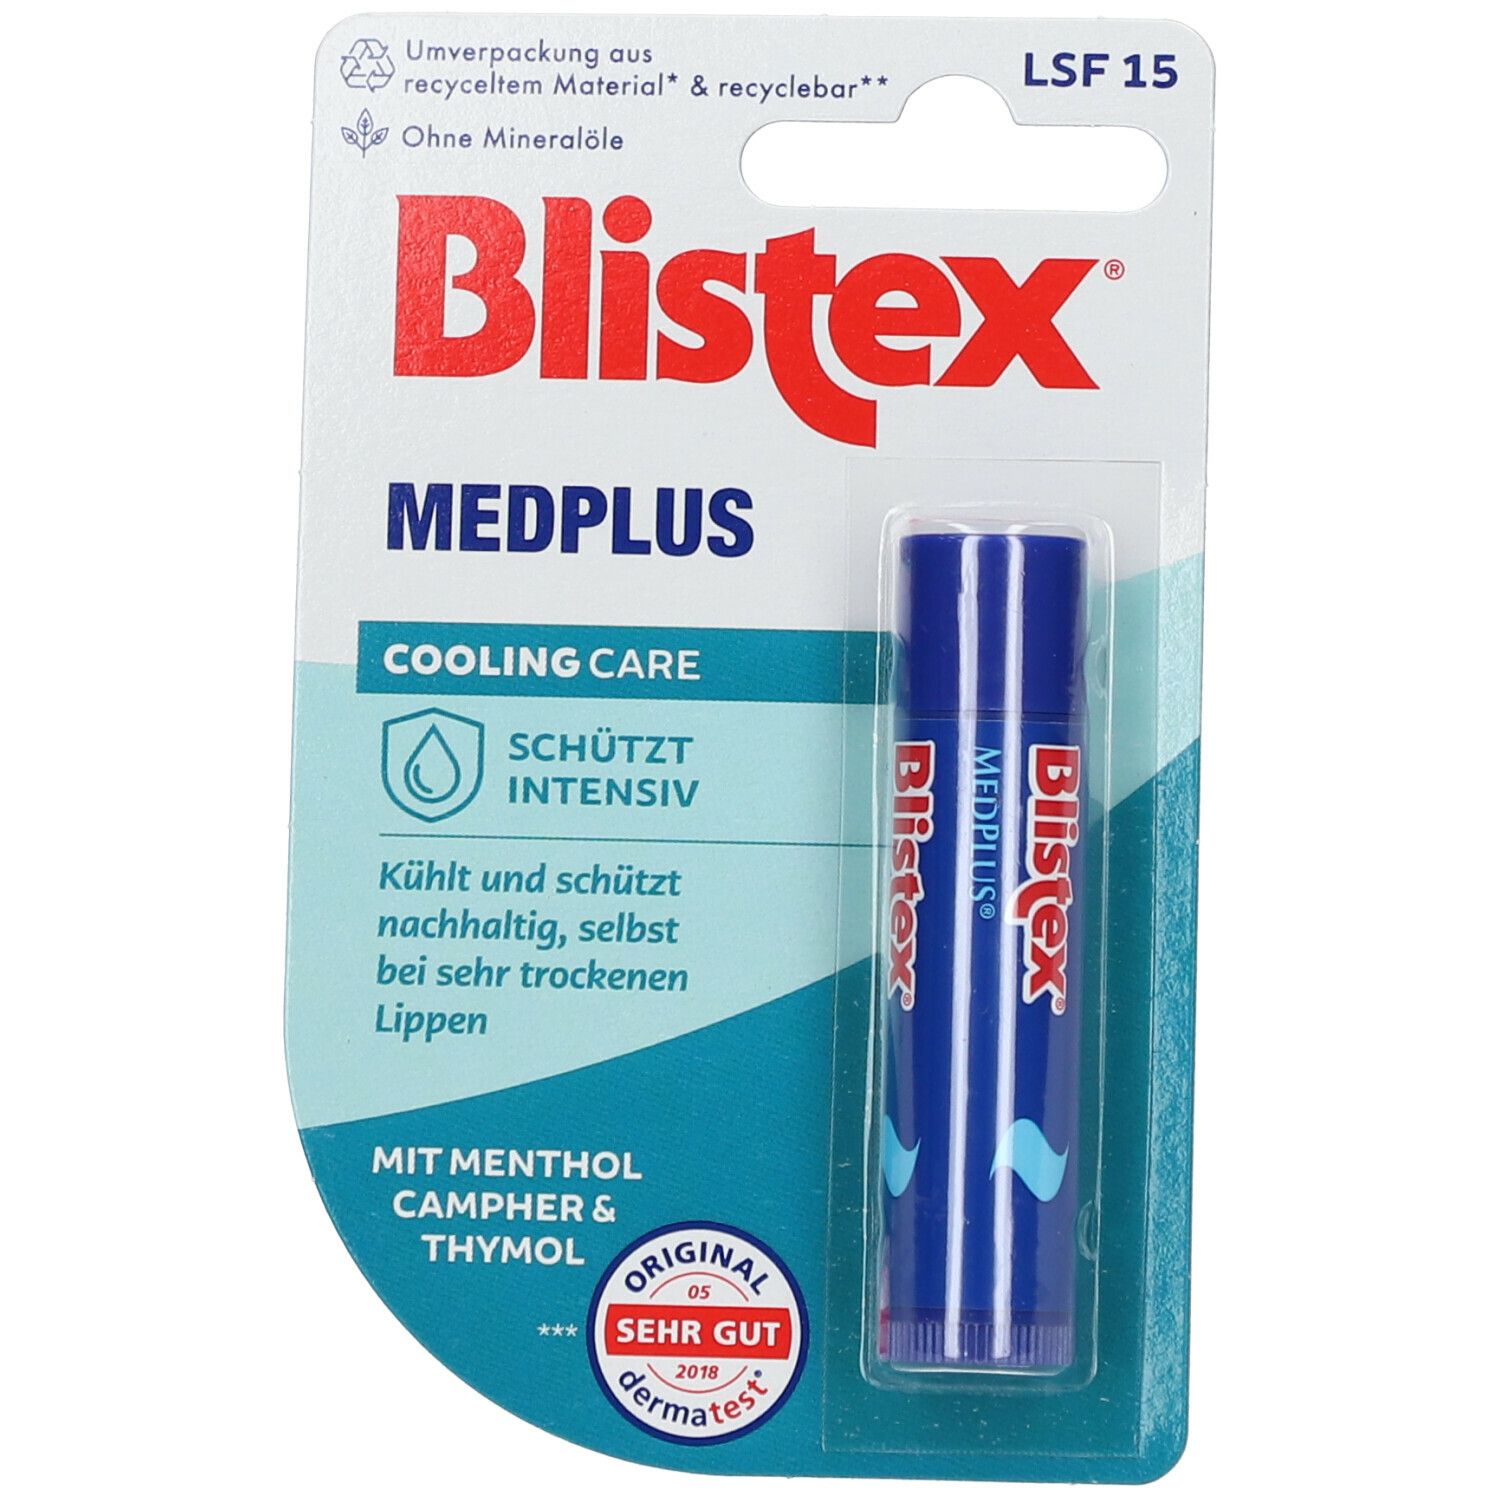 Blistex® MEDPLUS COOLING CARE